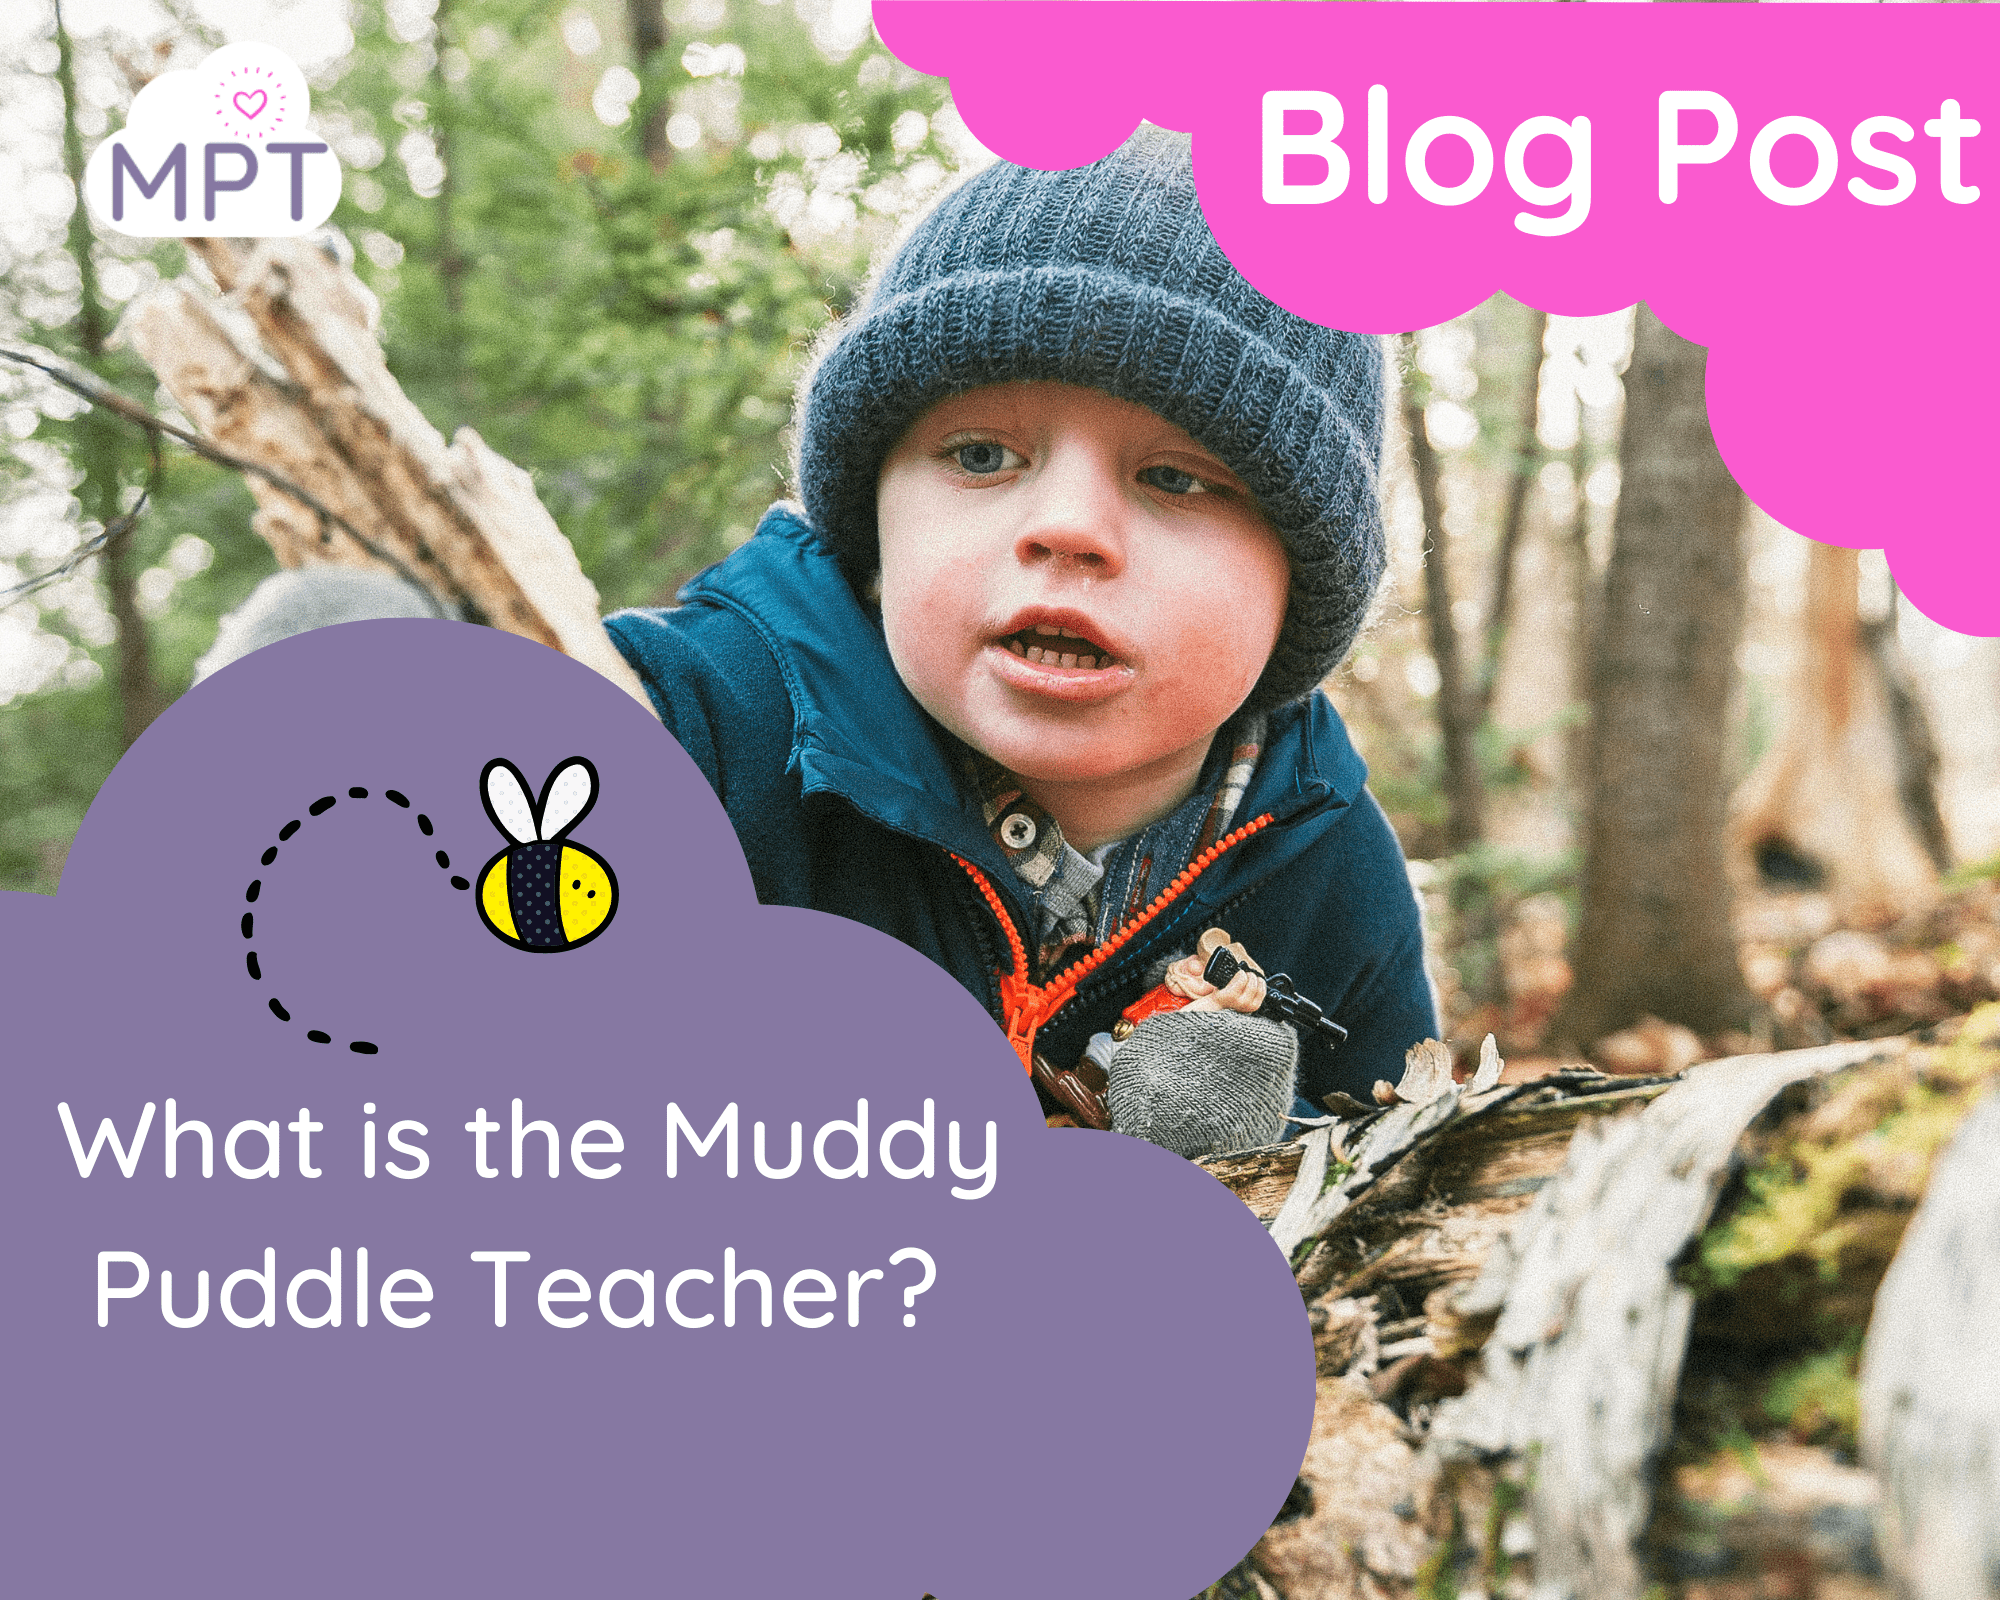 the muddy puddle teacher